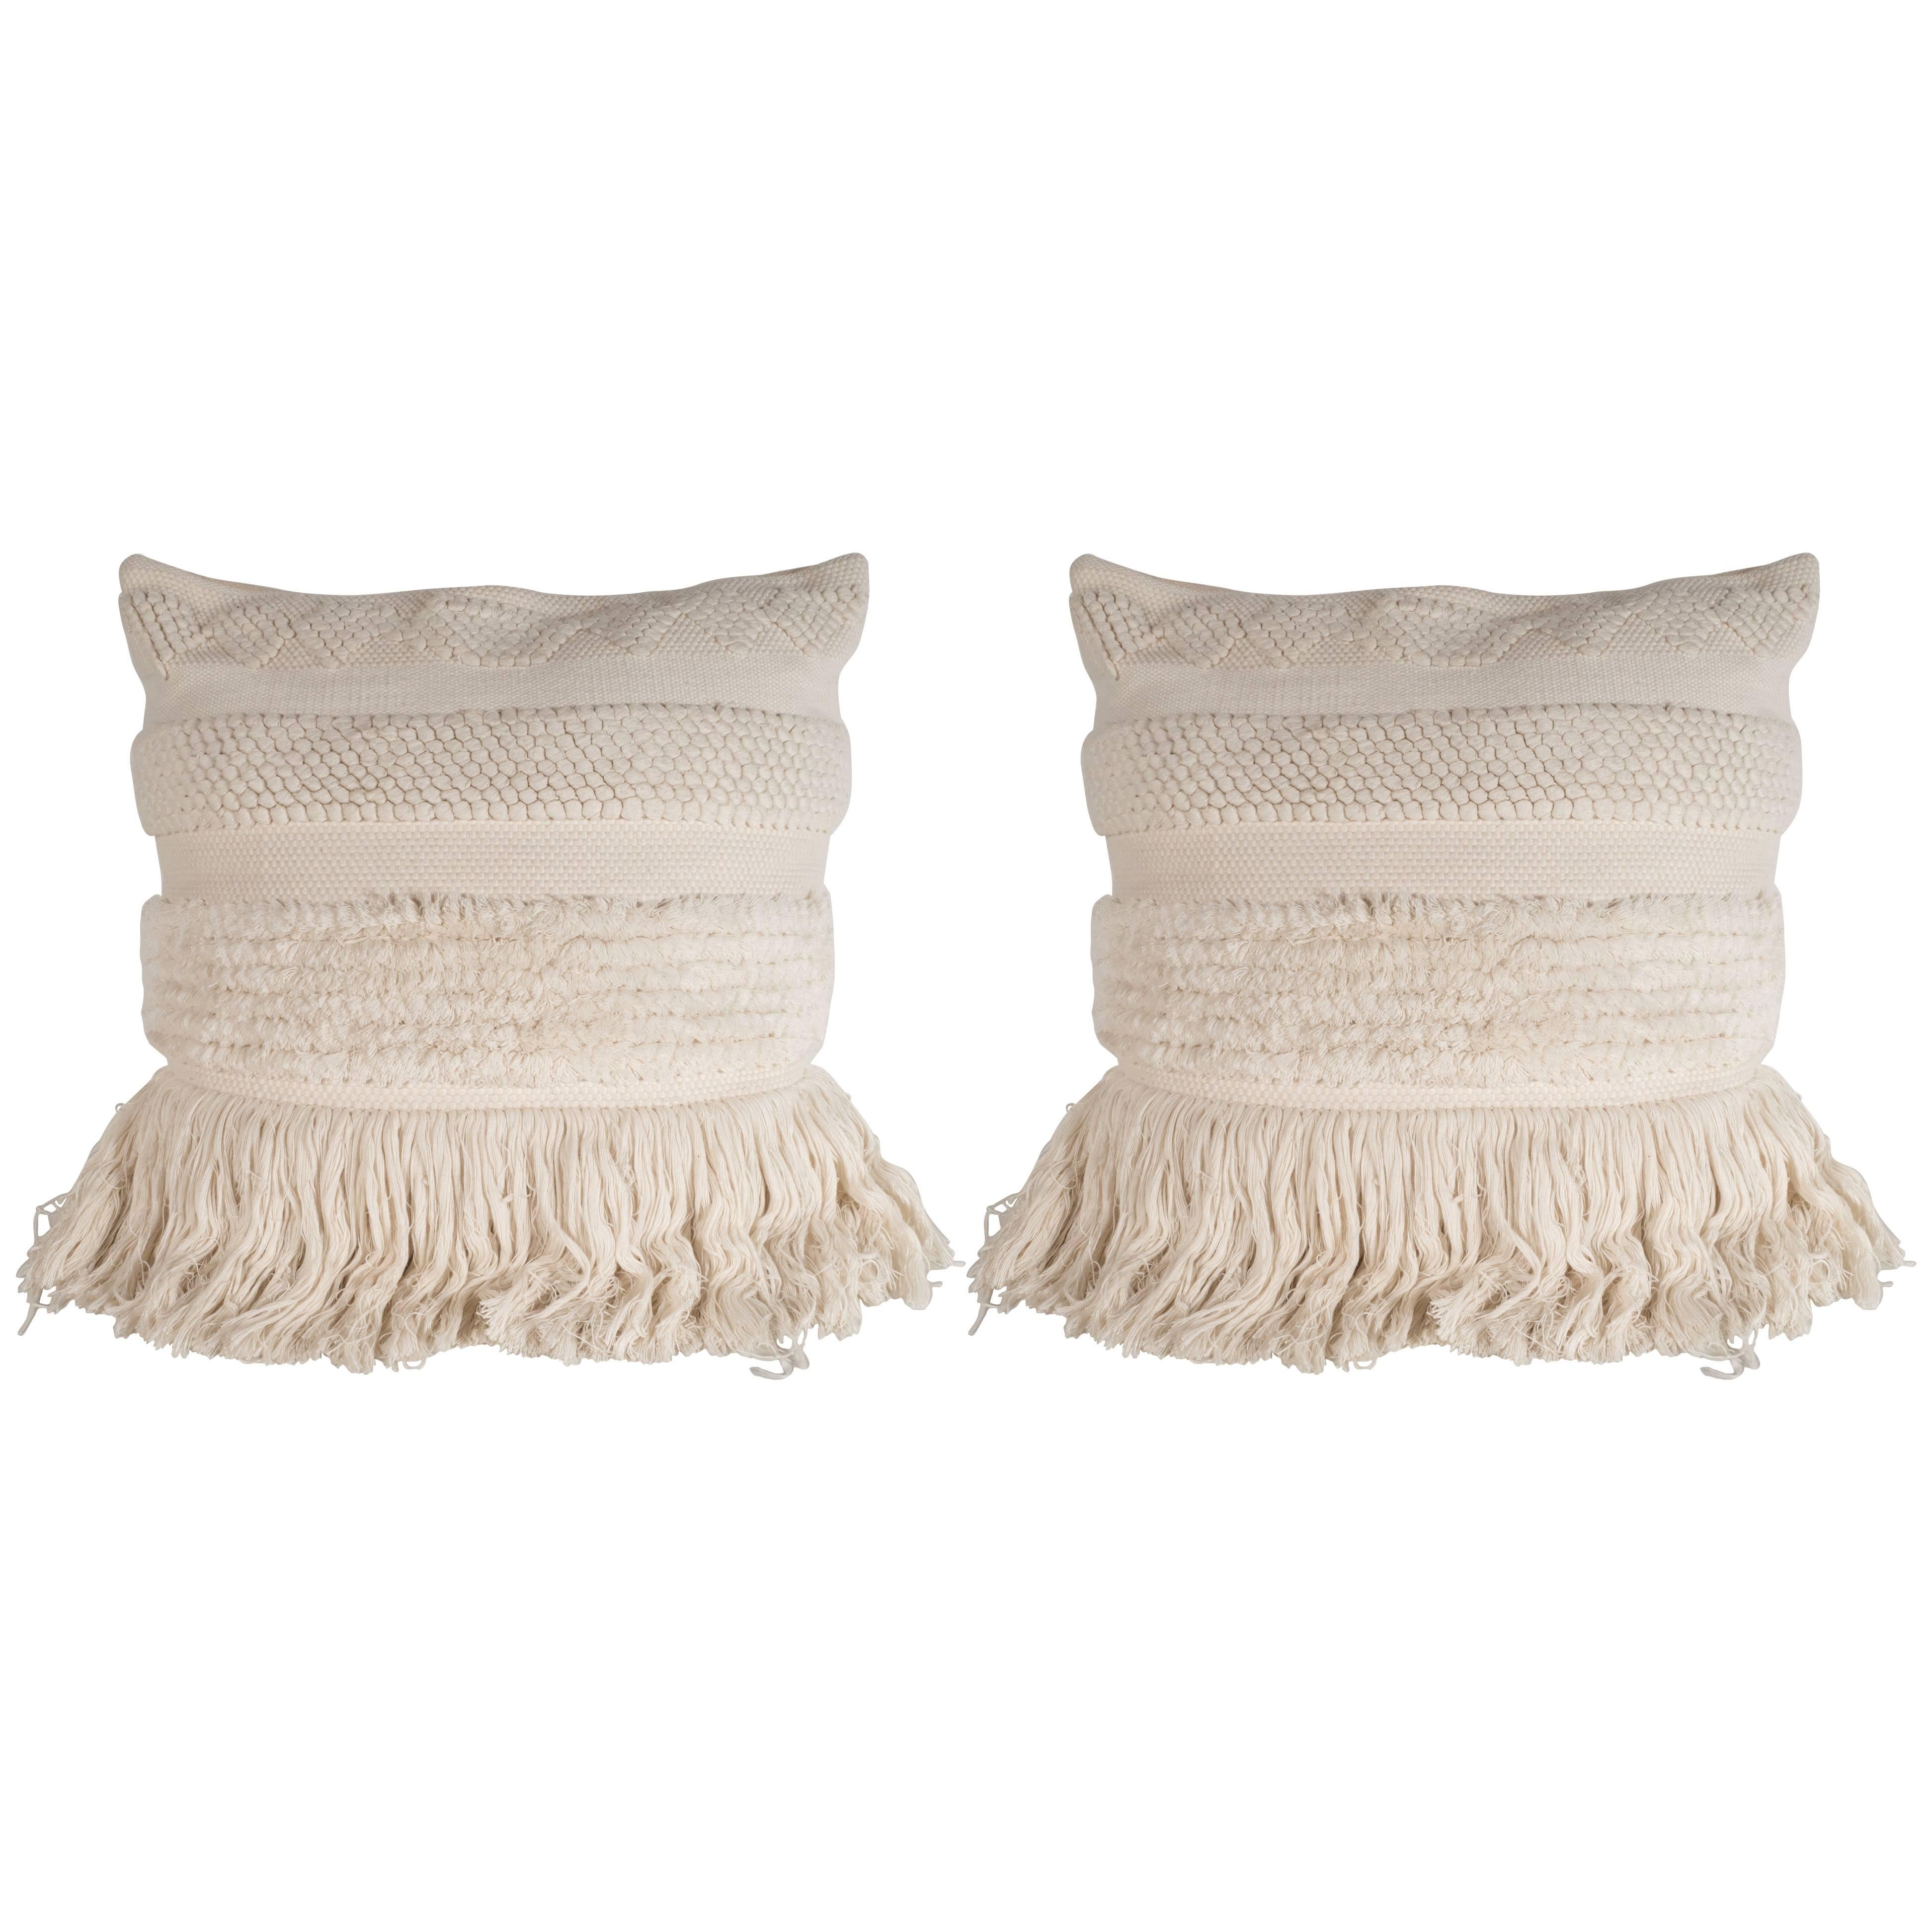 Pair of Modernist Textured Woven Pillows in a Bone Hue